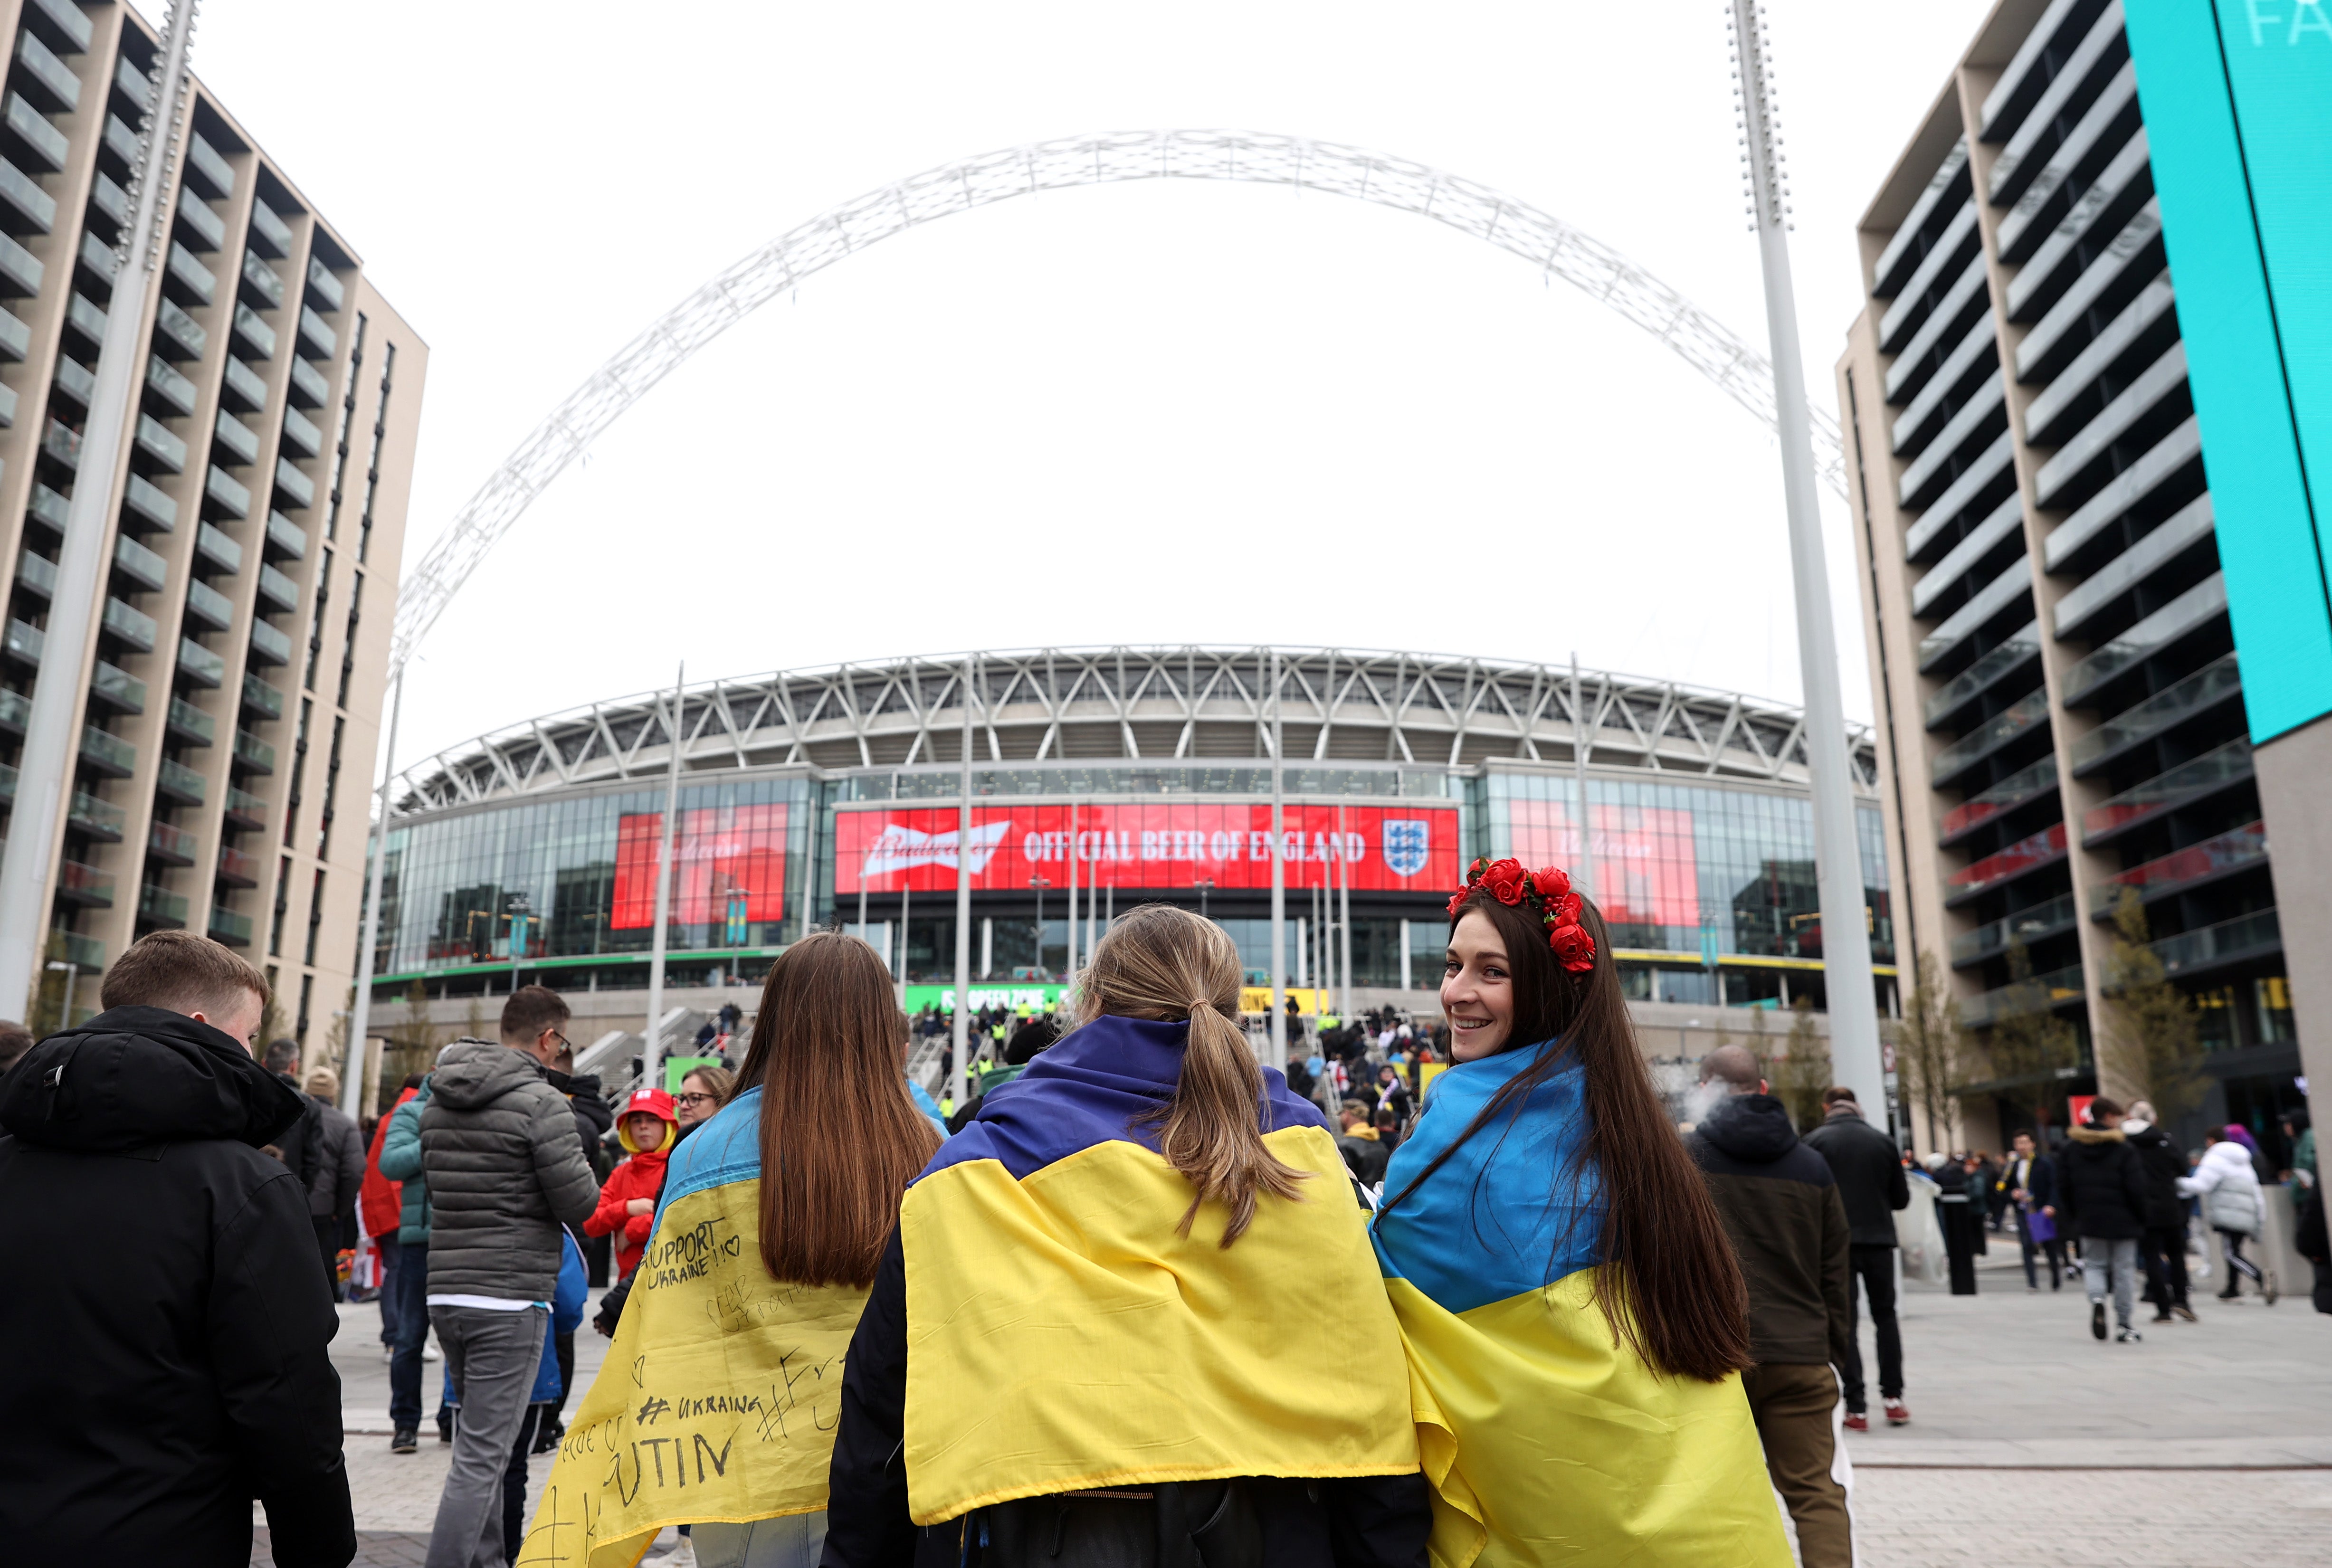 Ukrainian fans arrive at Wembley before kick-off